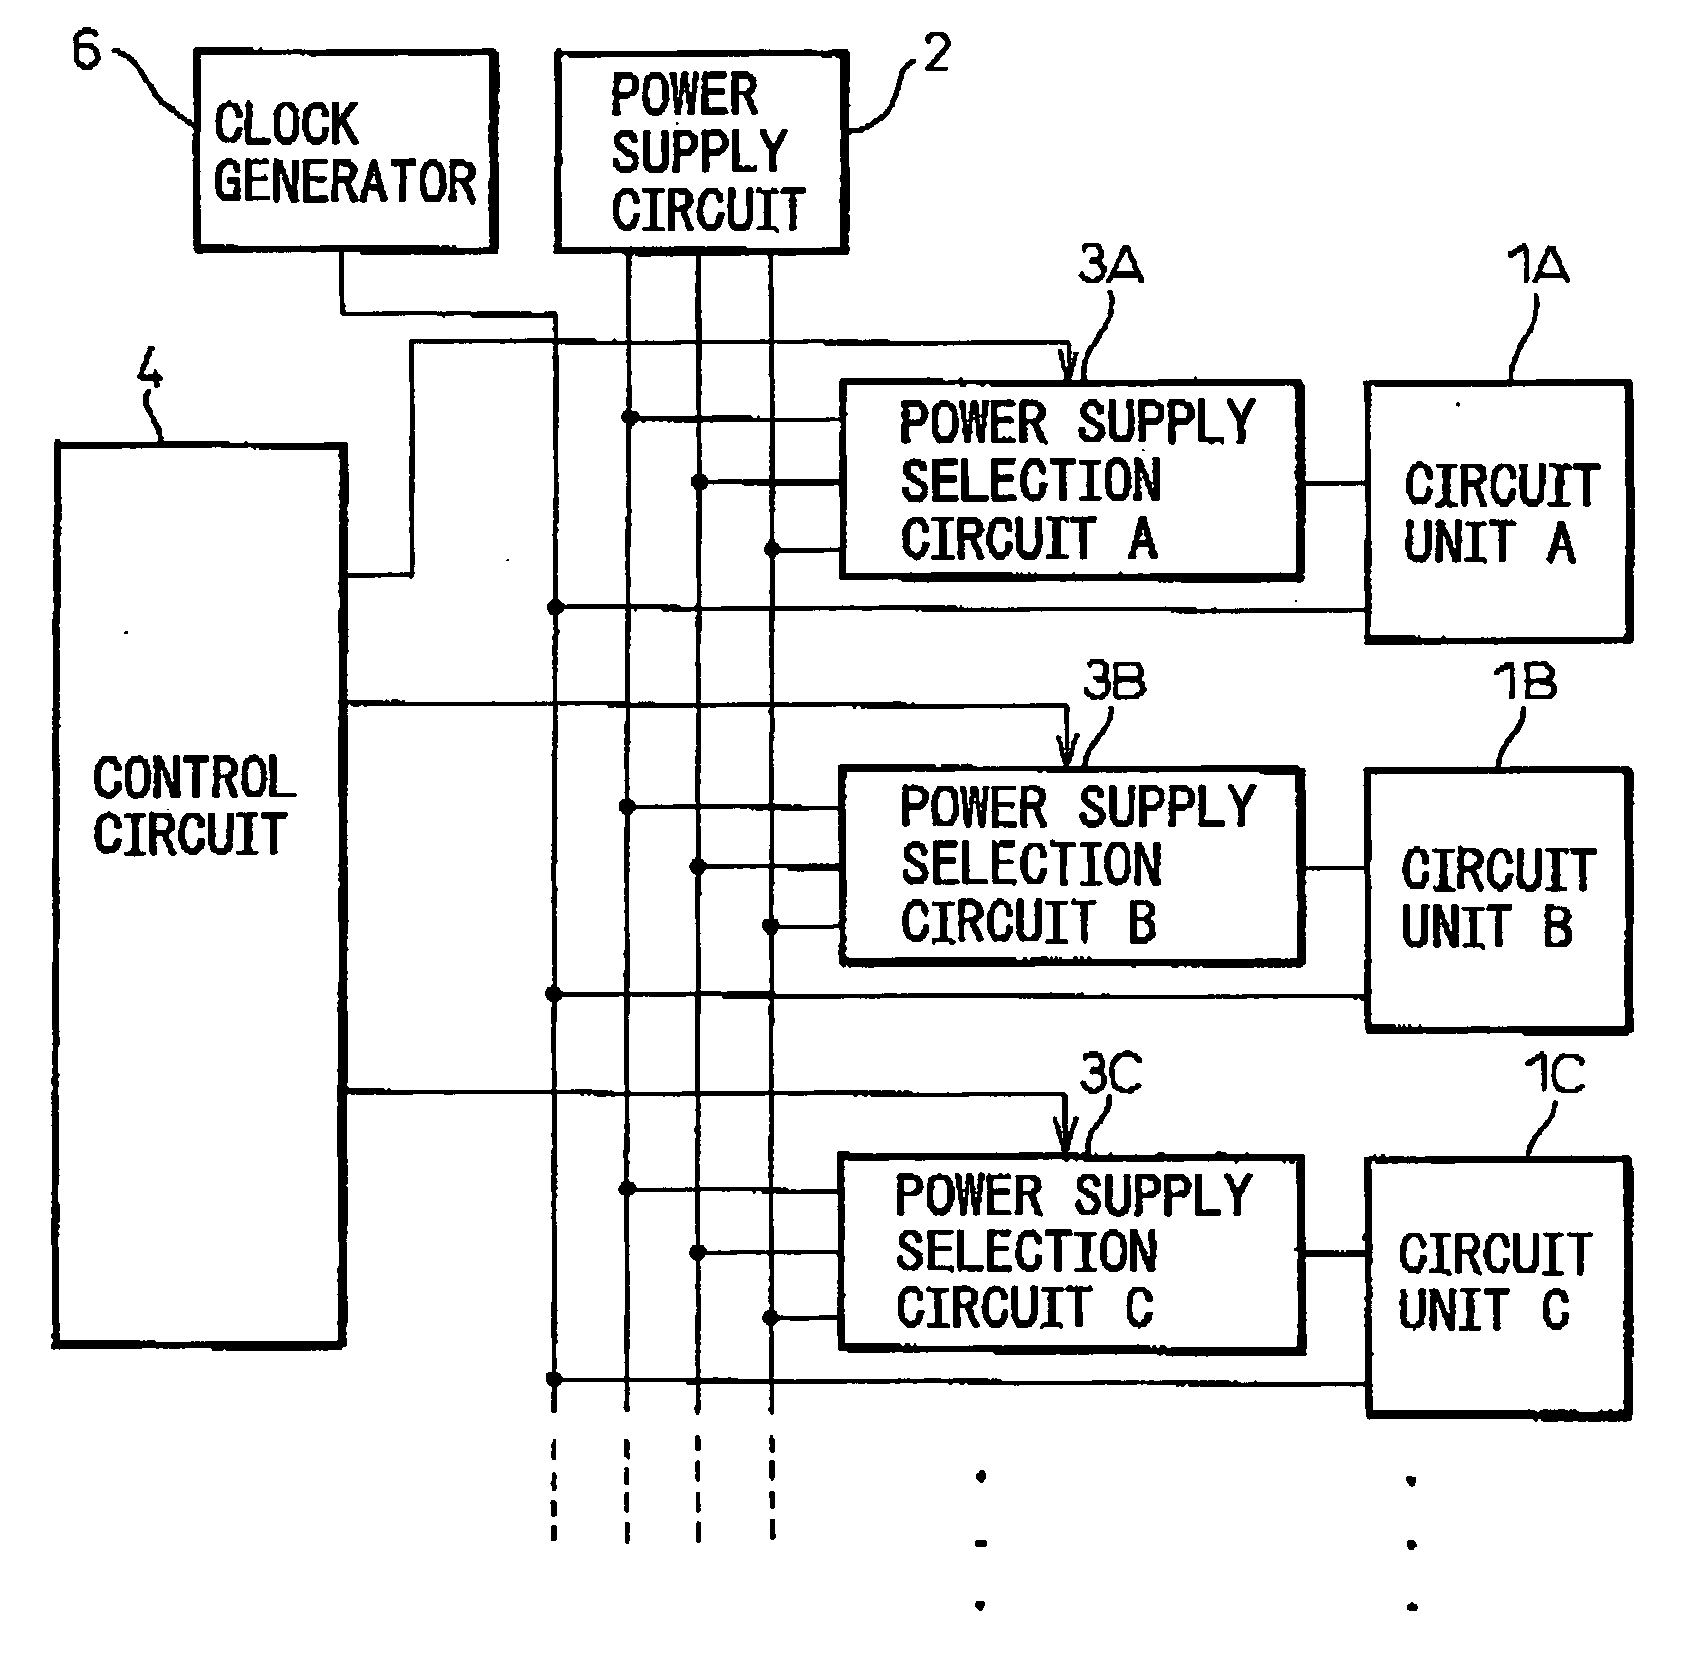 Circuit system